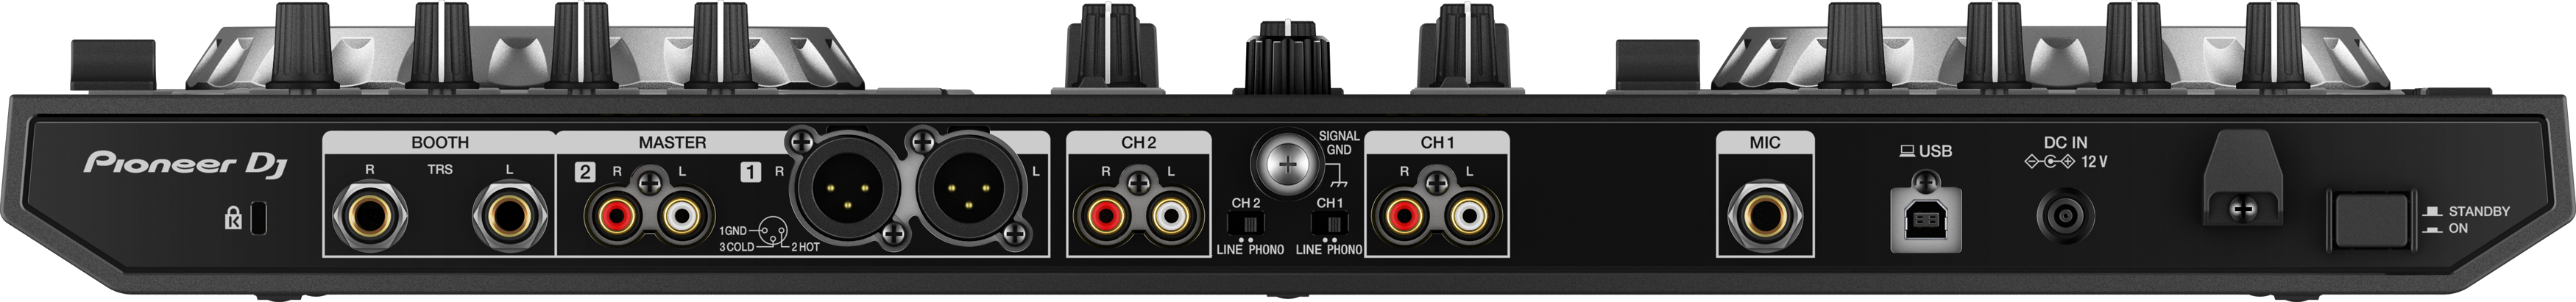 Pioneer Dj Ddj-sr2 - USB DJ controller - Variation 2